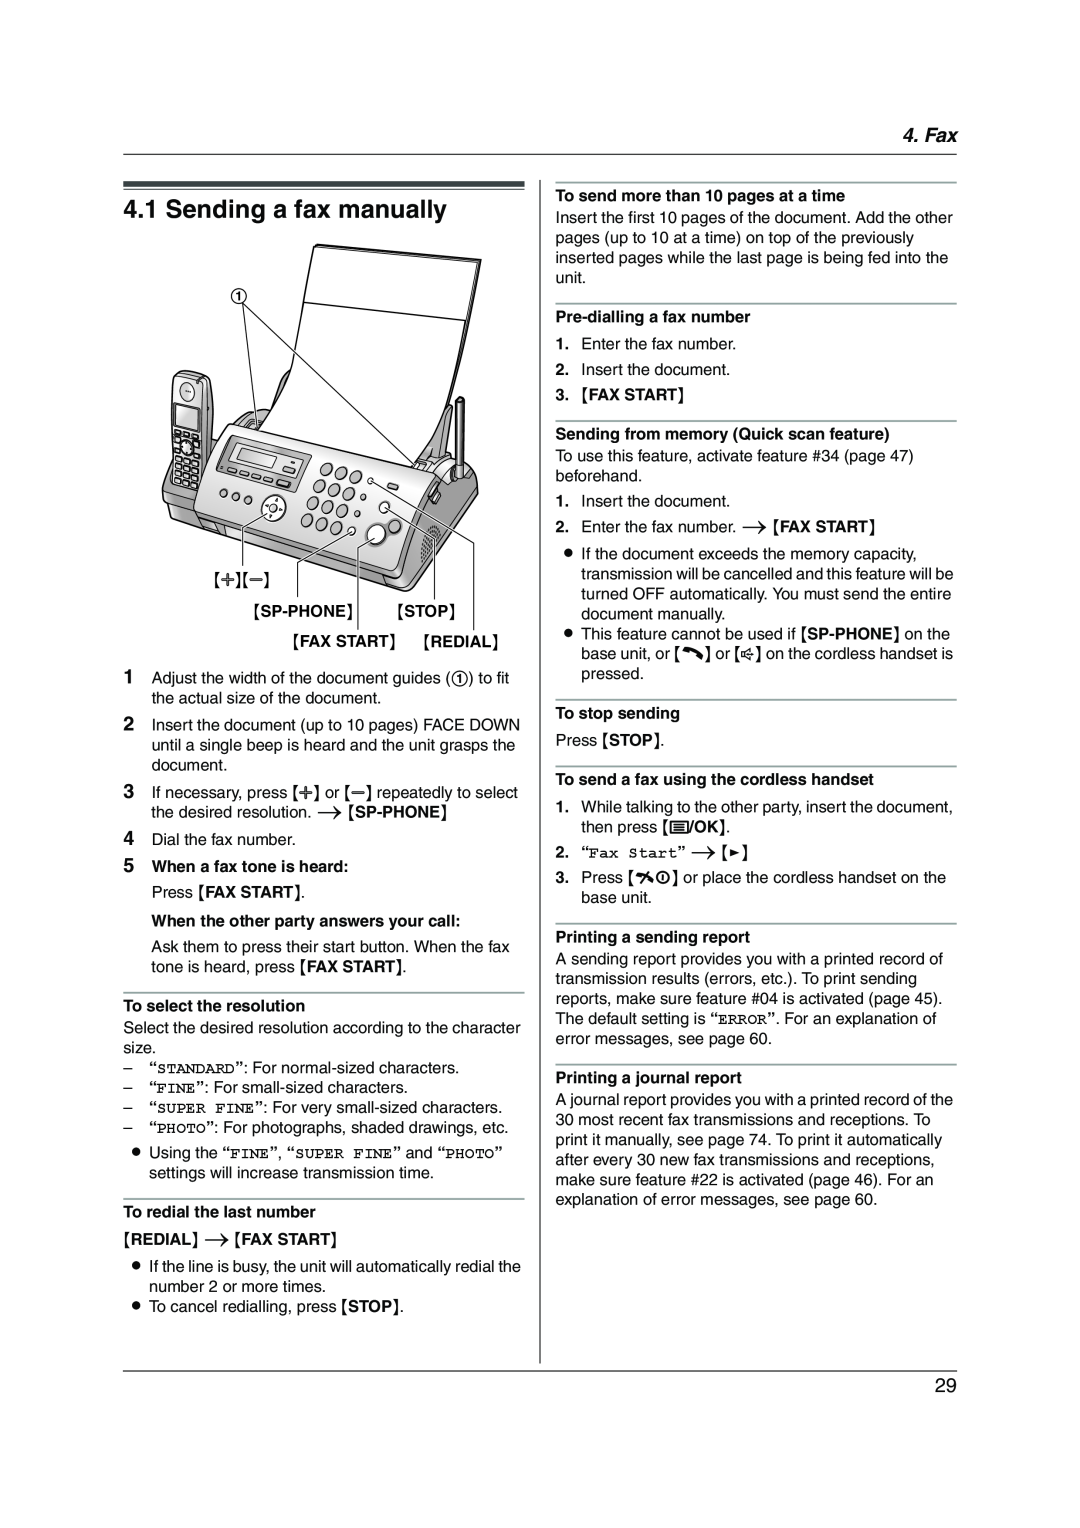 Panasonic KX-FC228HK operating instructions Sending a fax manually, 2. “Fax Start” 